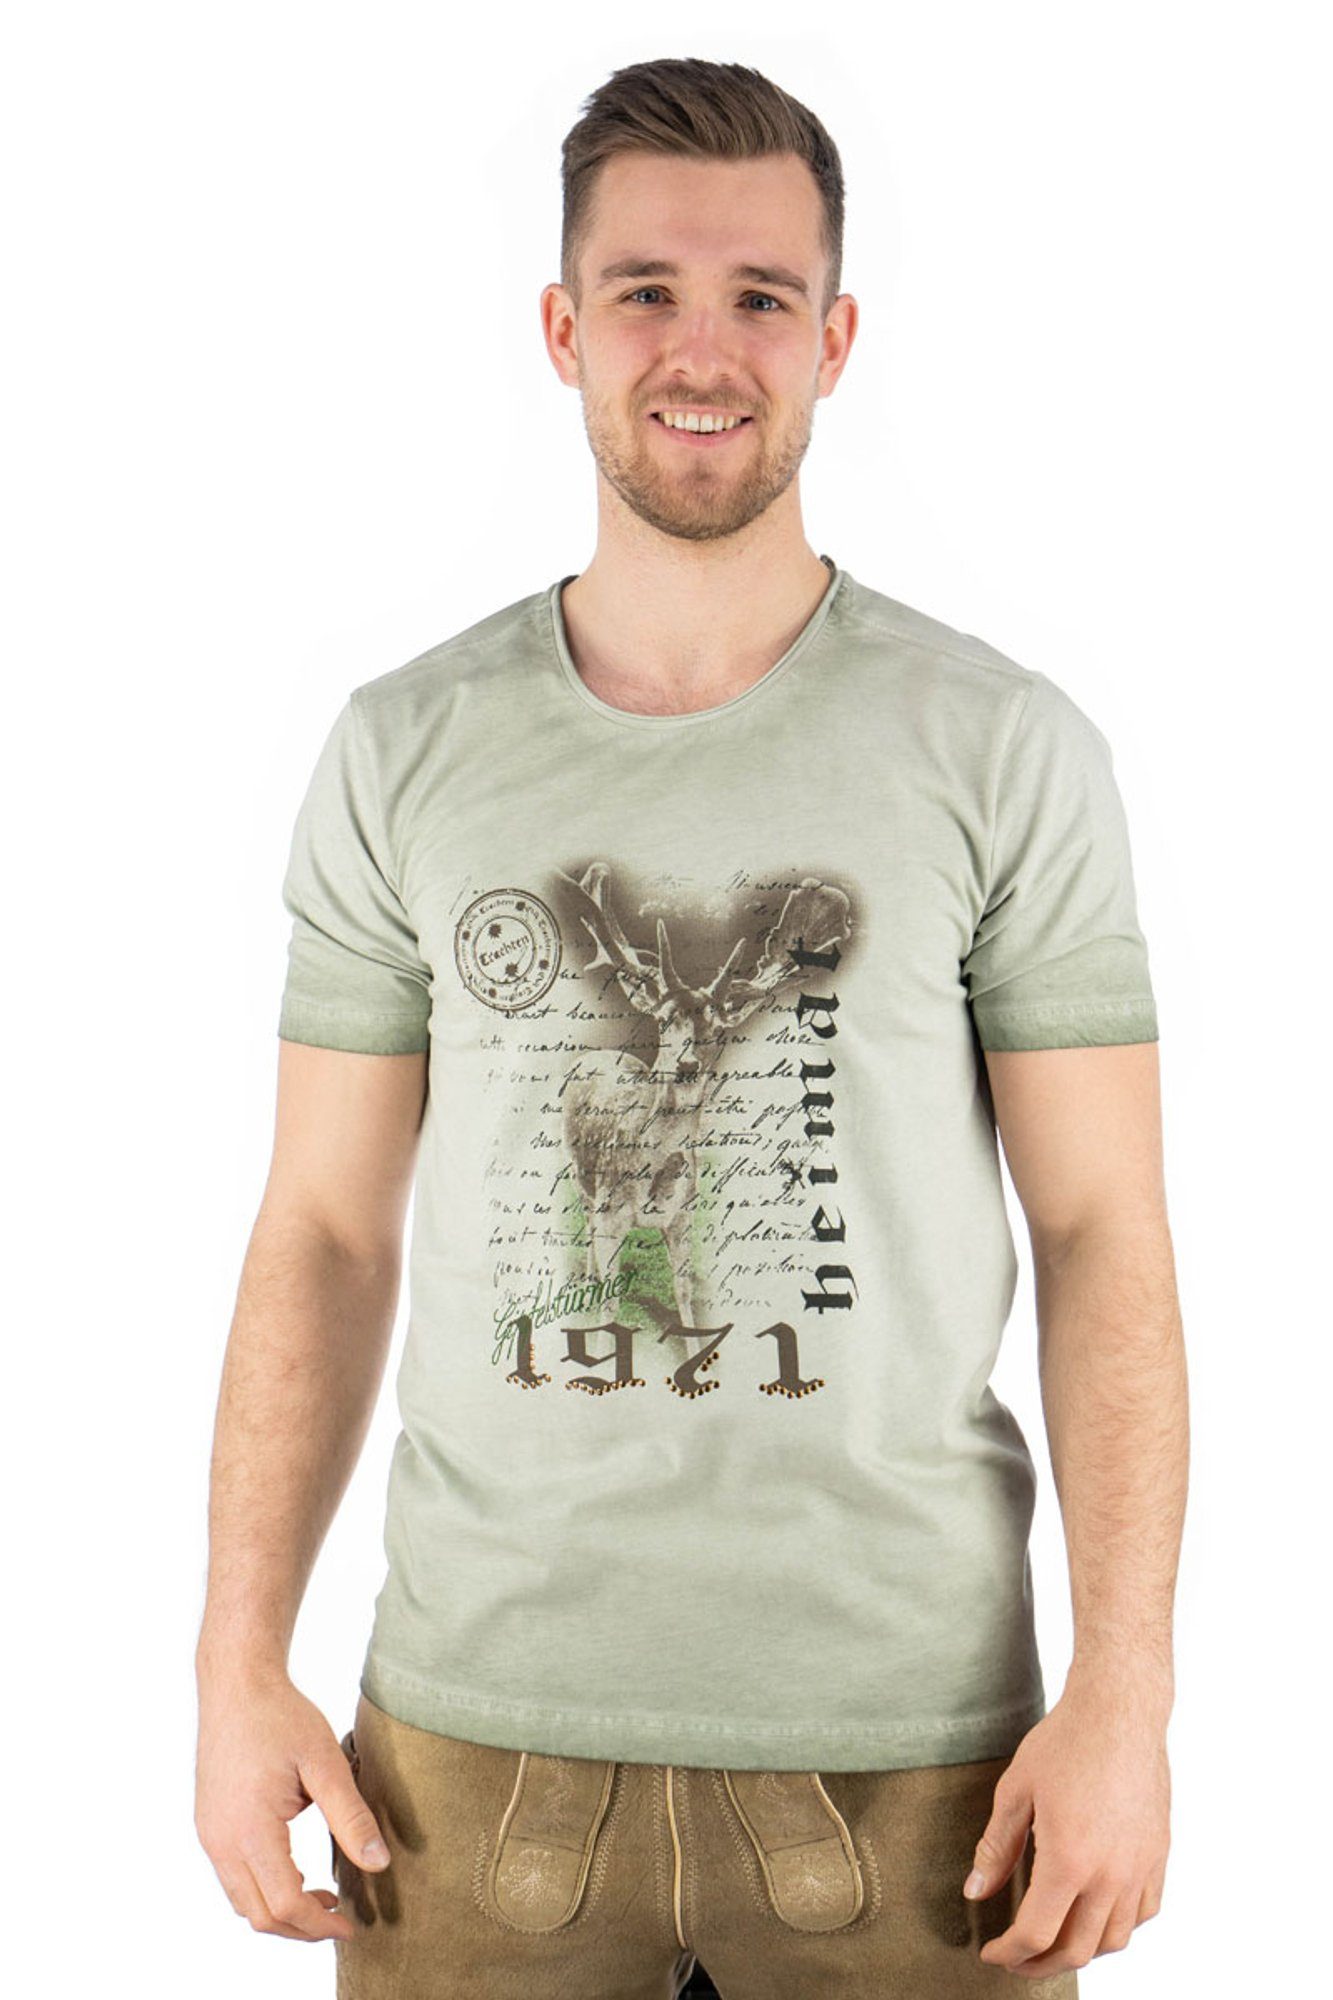 OS-Trachten Trachtenshirt Ofapuo Kurzarm T-Shirt mit Motivdruck khaki/schlamm